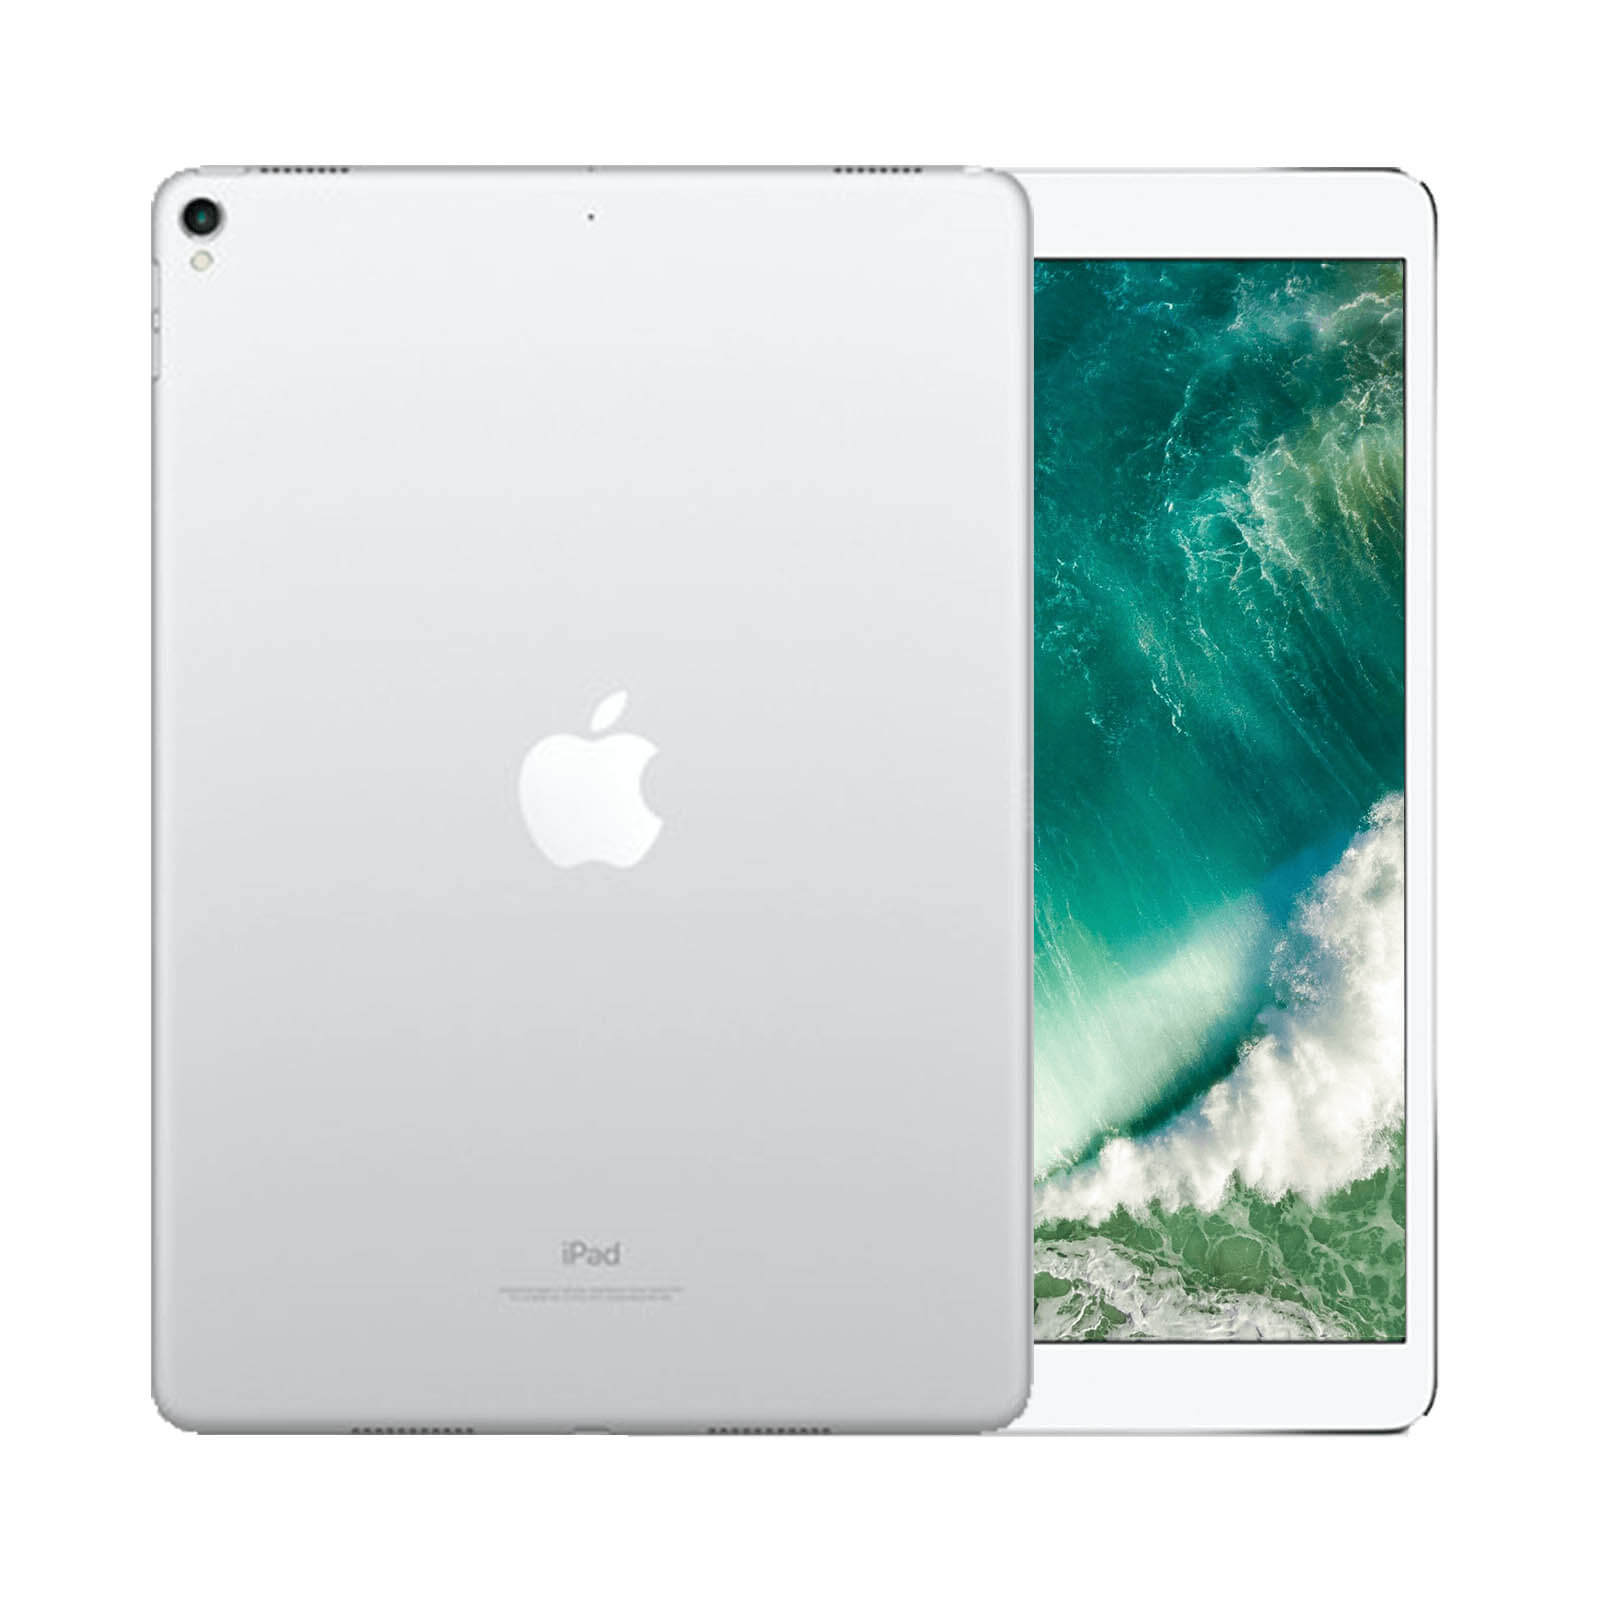 iPad Pro 11 Inch 512GB Silver Very Good - Unlocked 512GB Silver Very Good